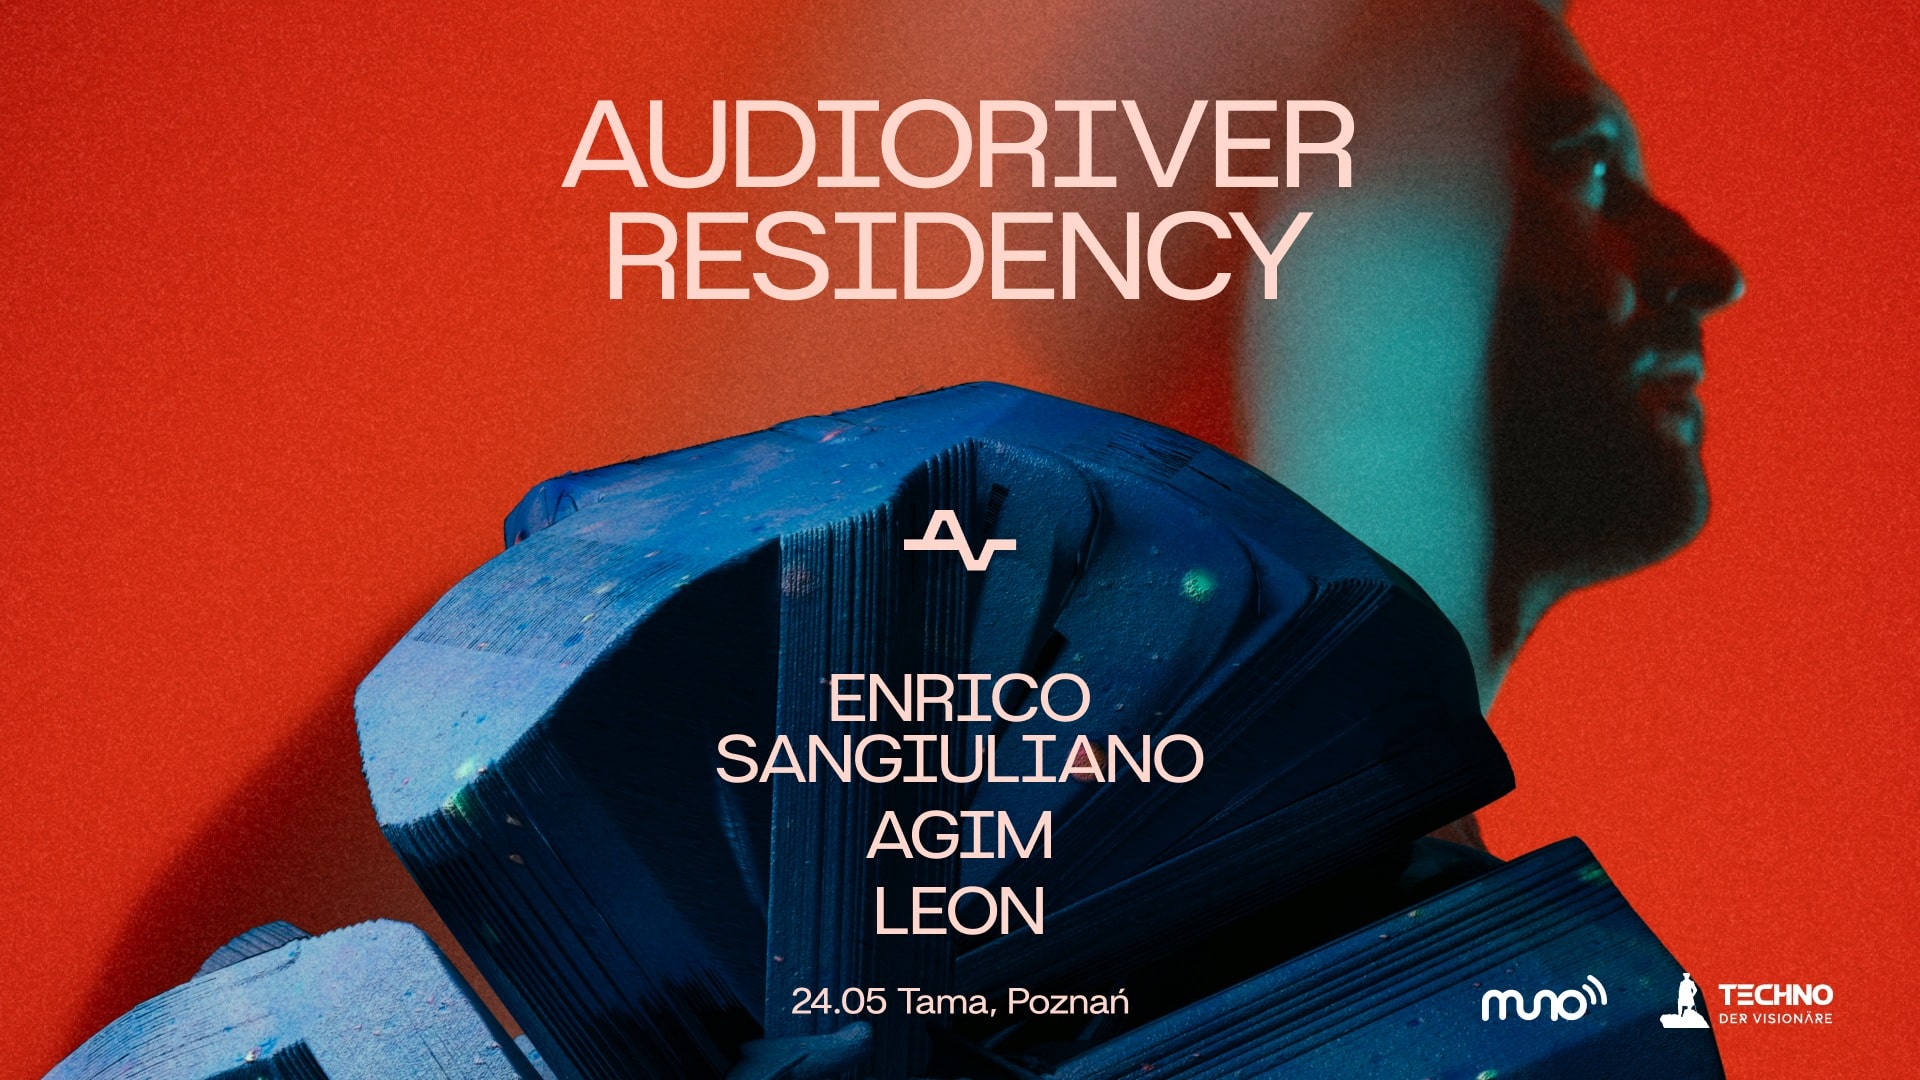 Audioriver Residency pres. Enrico Sangiuliano | Poznań